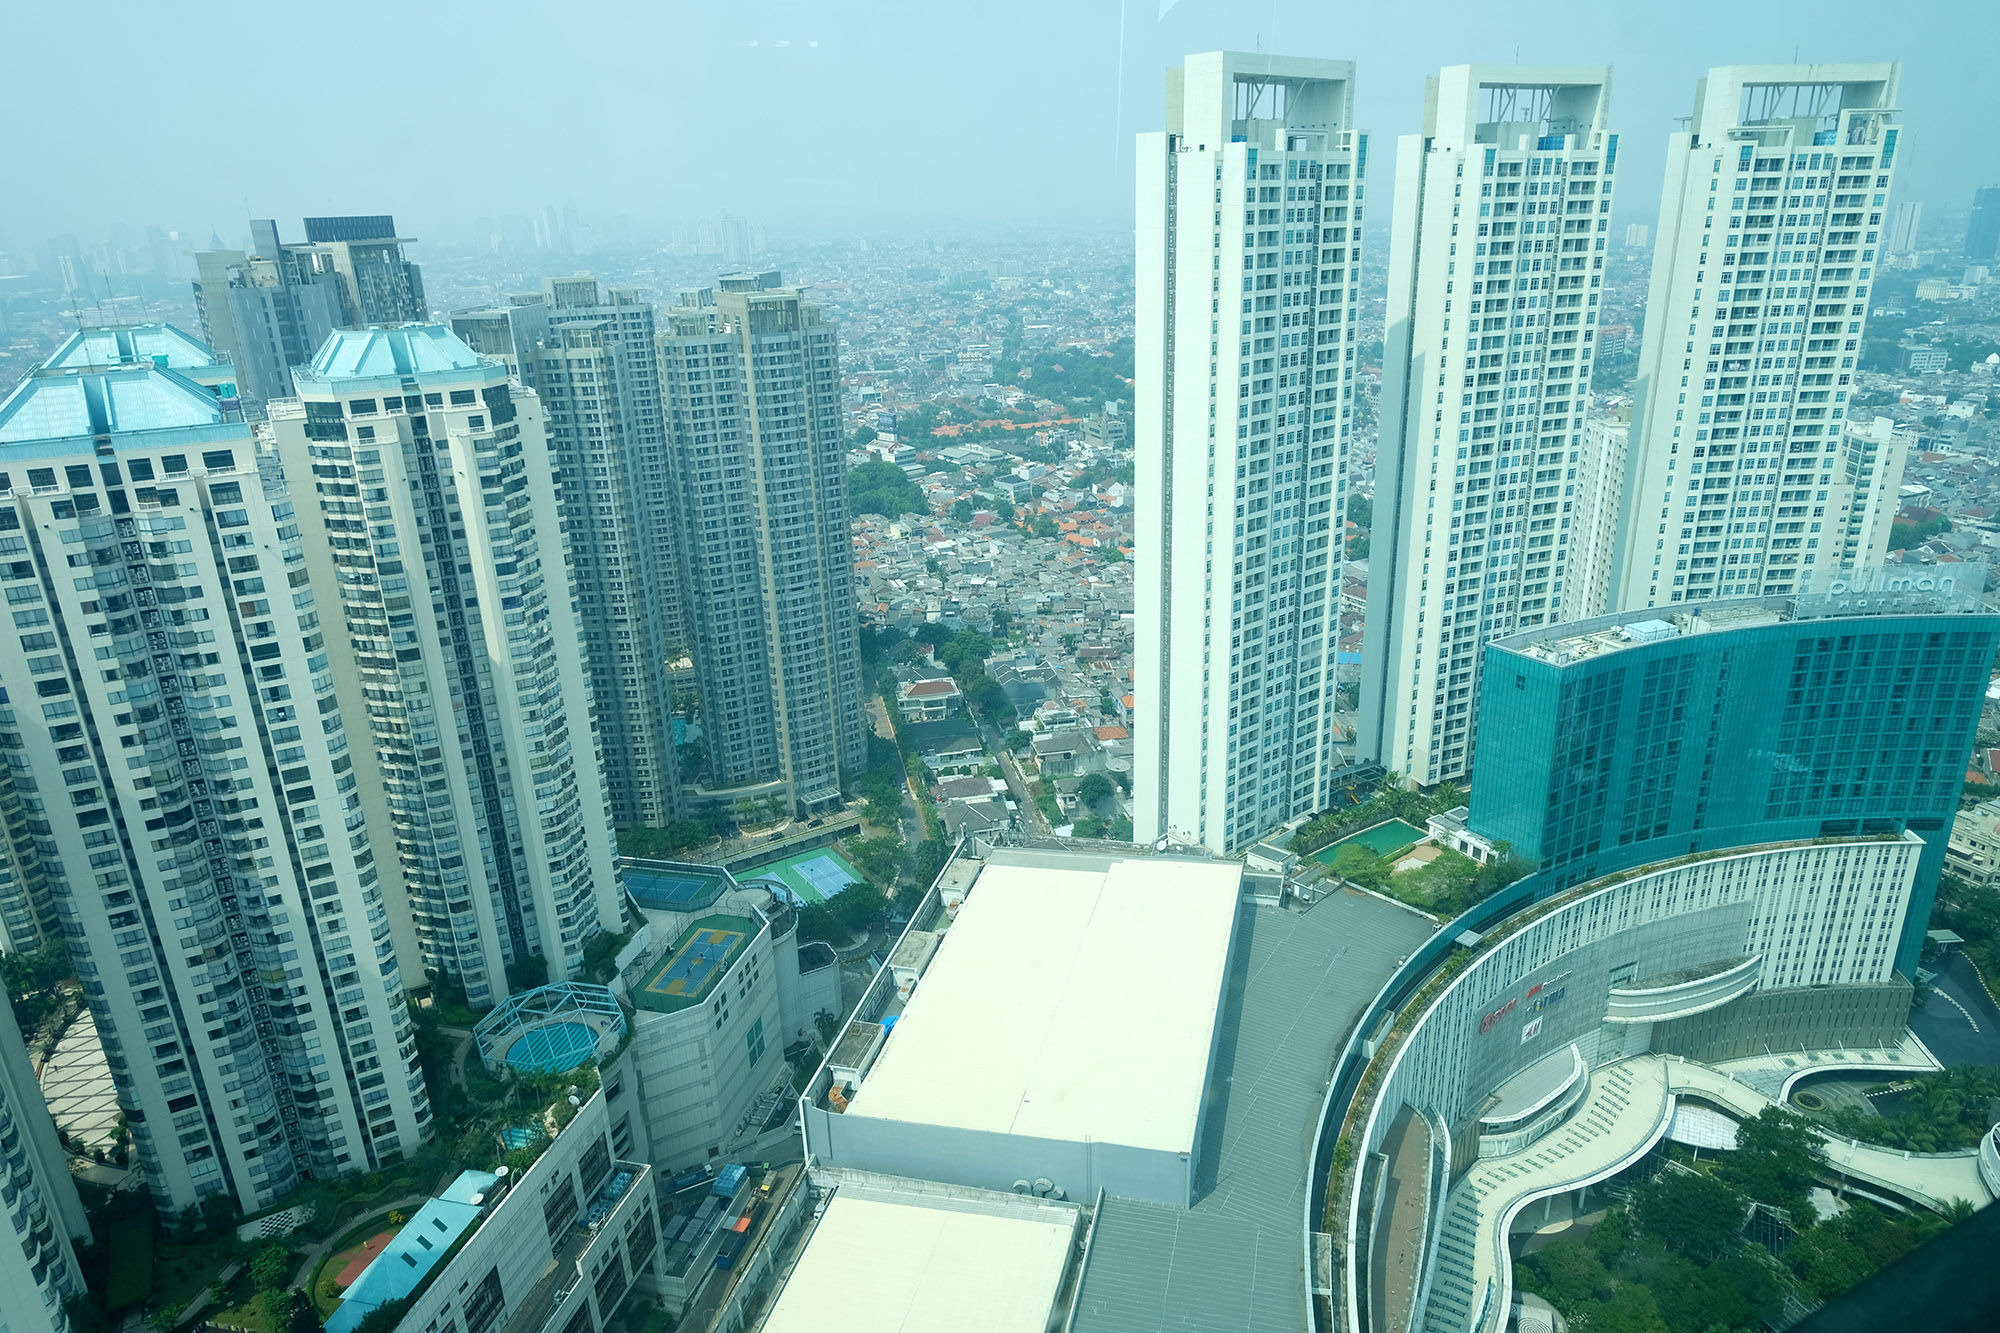 Suasana deretan gedung apartemen di kawasan Jakarta Barat, Sabtu, 11 September 2021. Foto: Ismail Pohan/TrenAsia